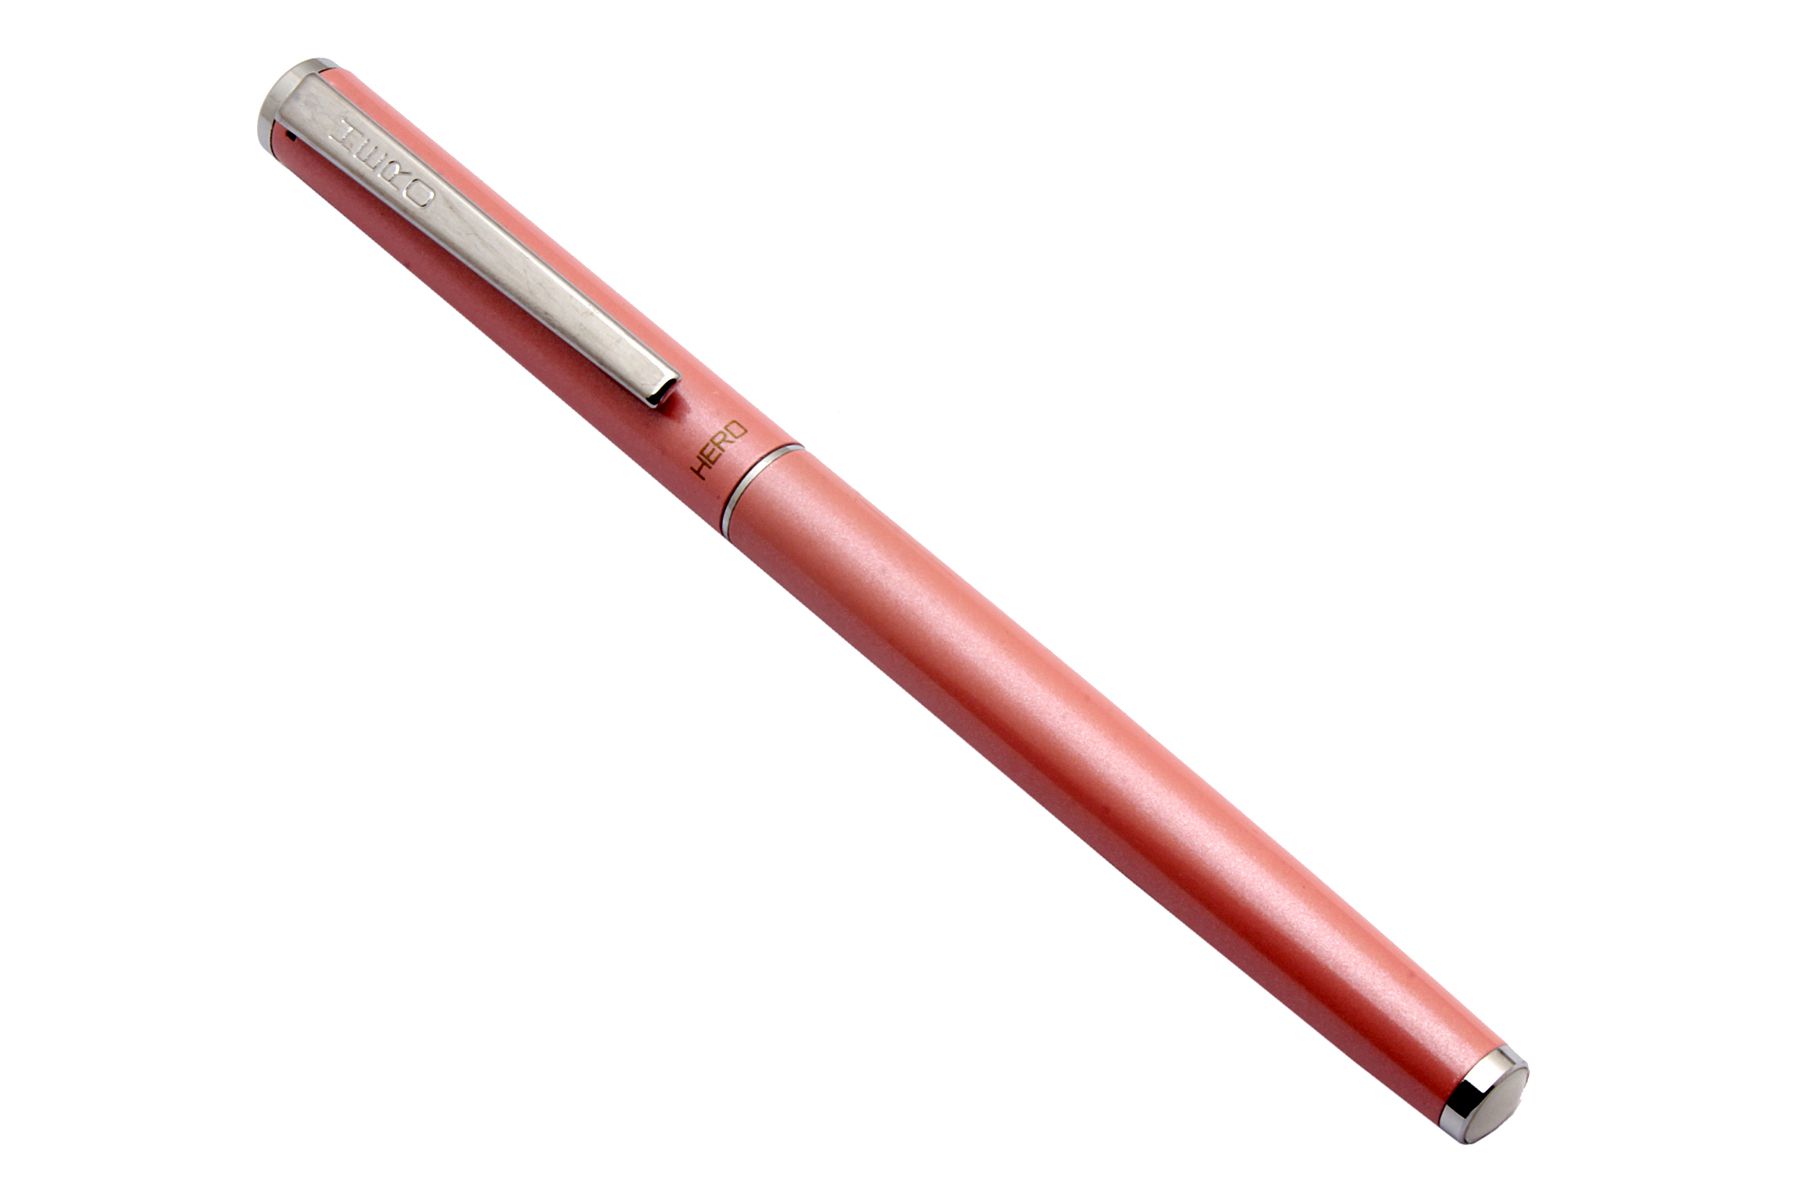     			Srpc Hero 70 All Rounder Nib Fountain Pen 360 Degree Angle Writing Peach Color Metal Body & Chrome trims